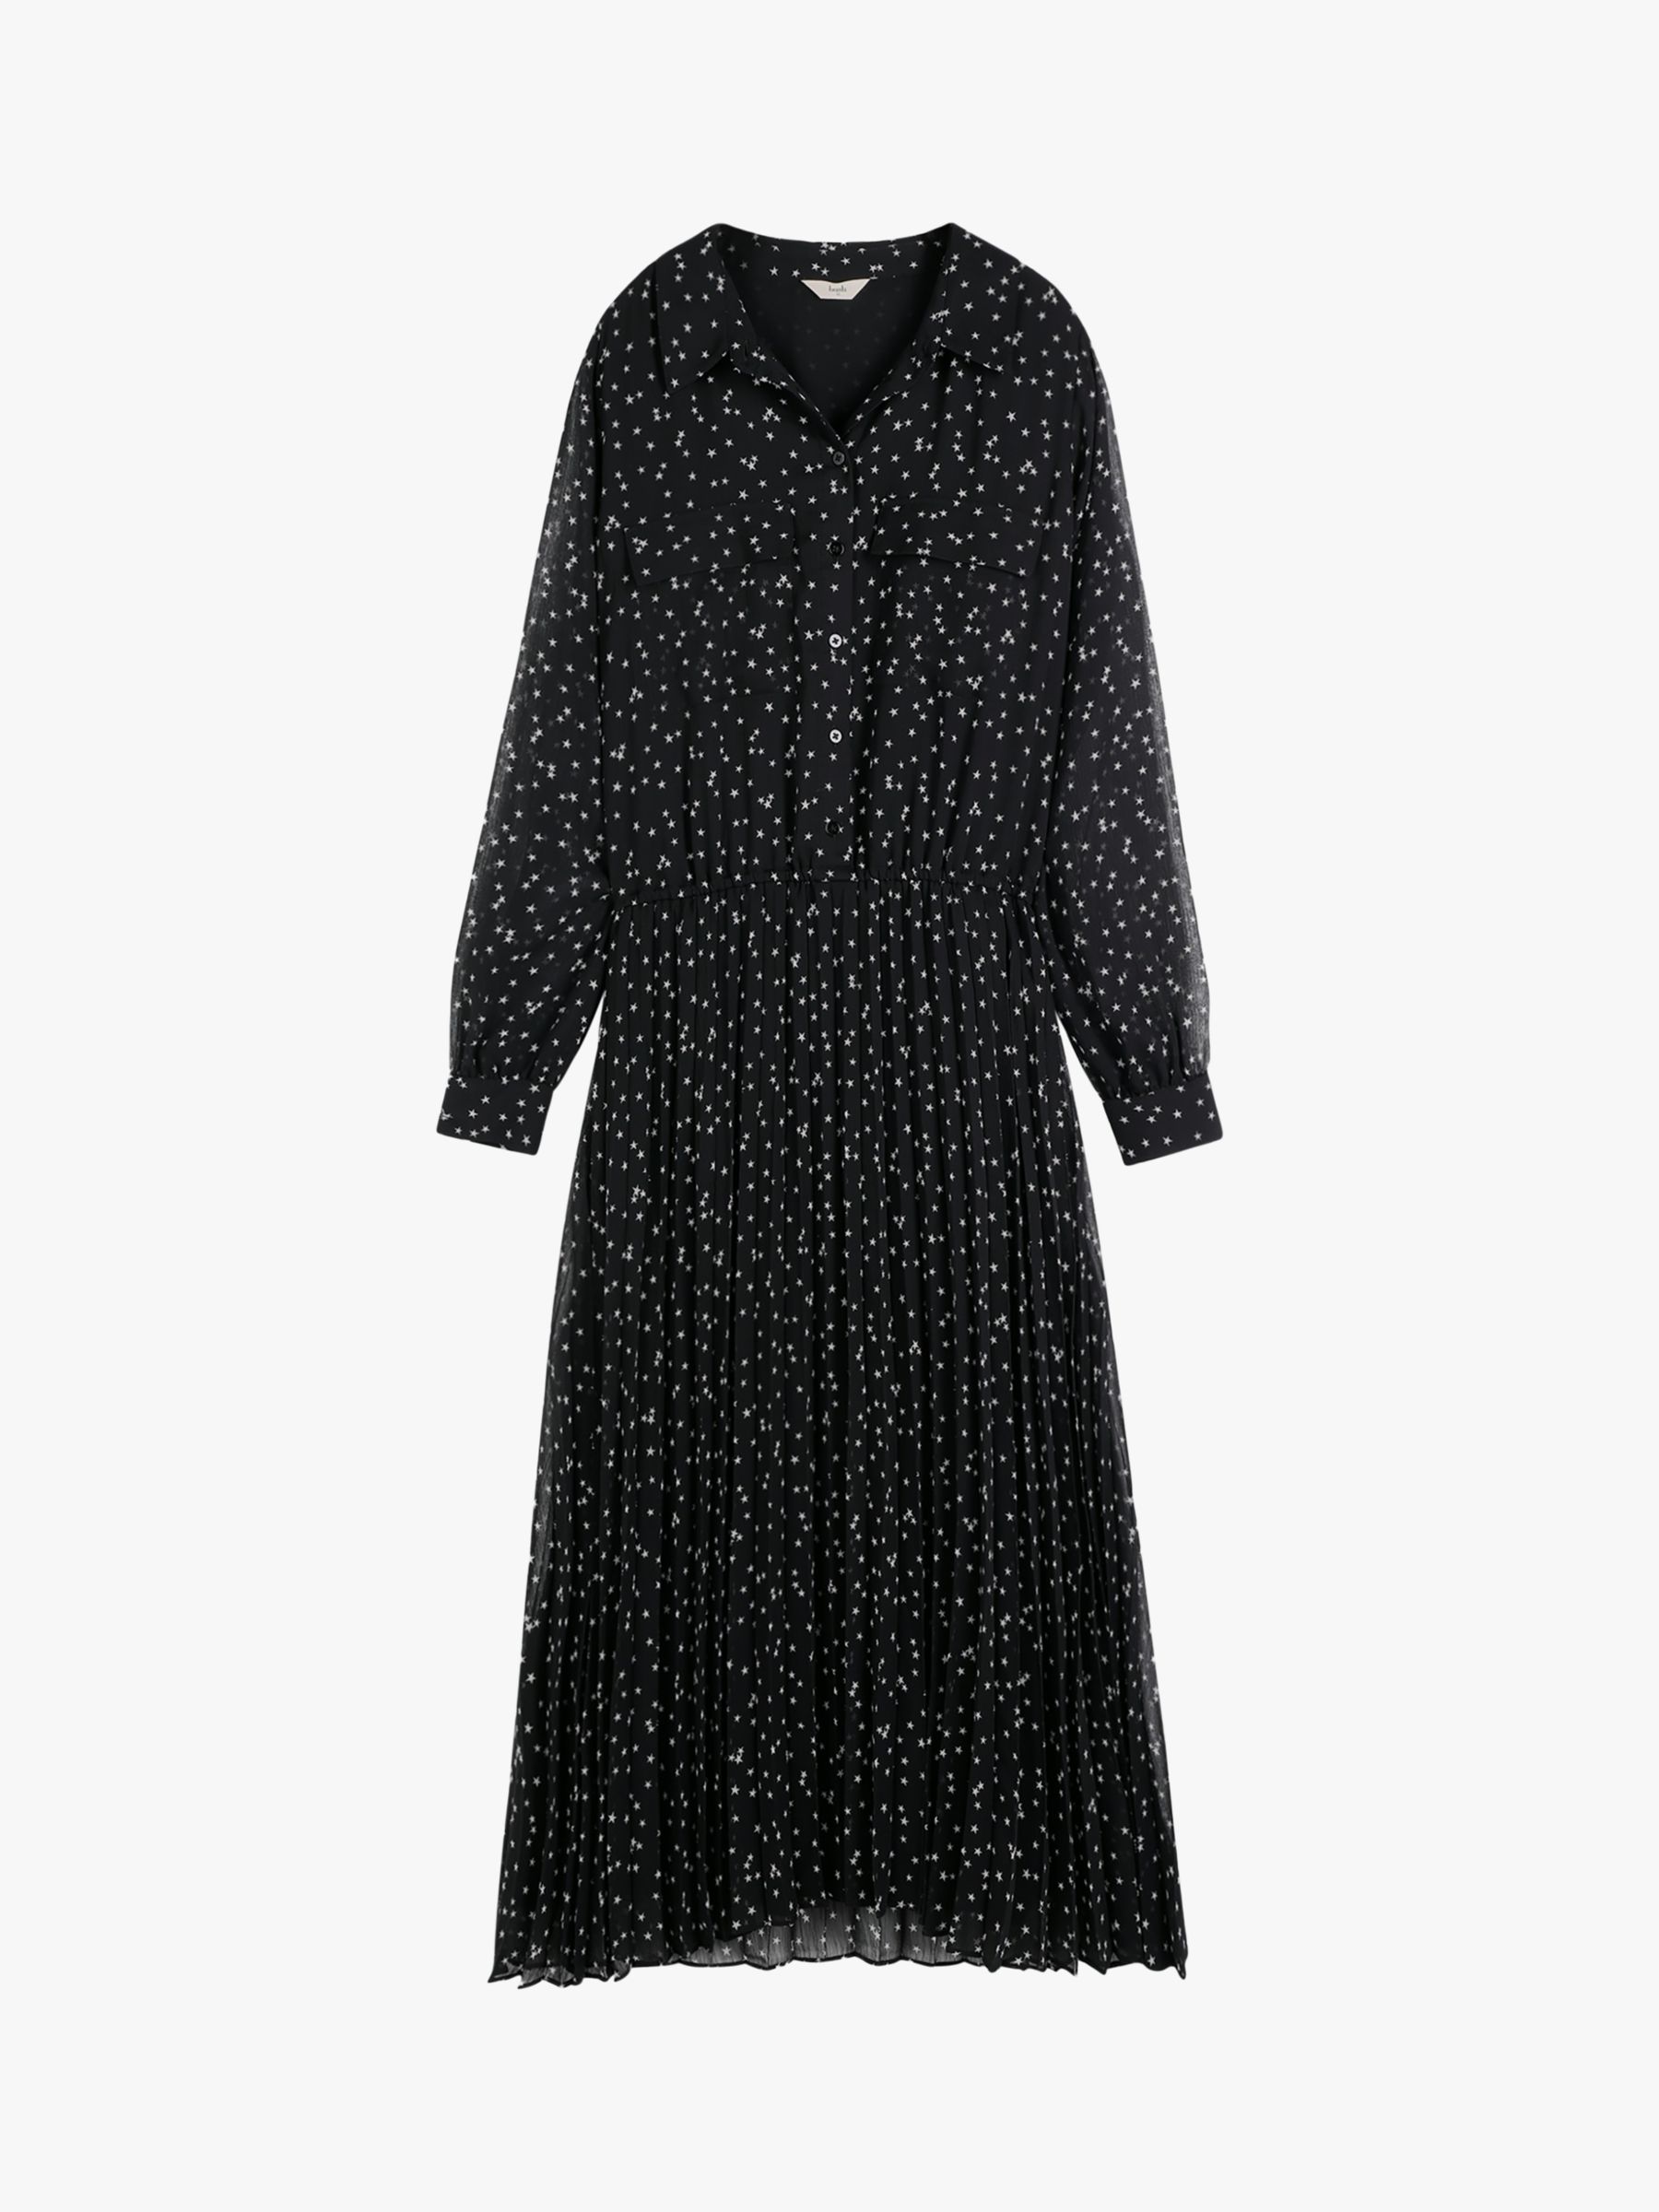 hush Rachelle Star Midi Dress, Black, 6